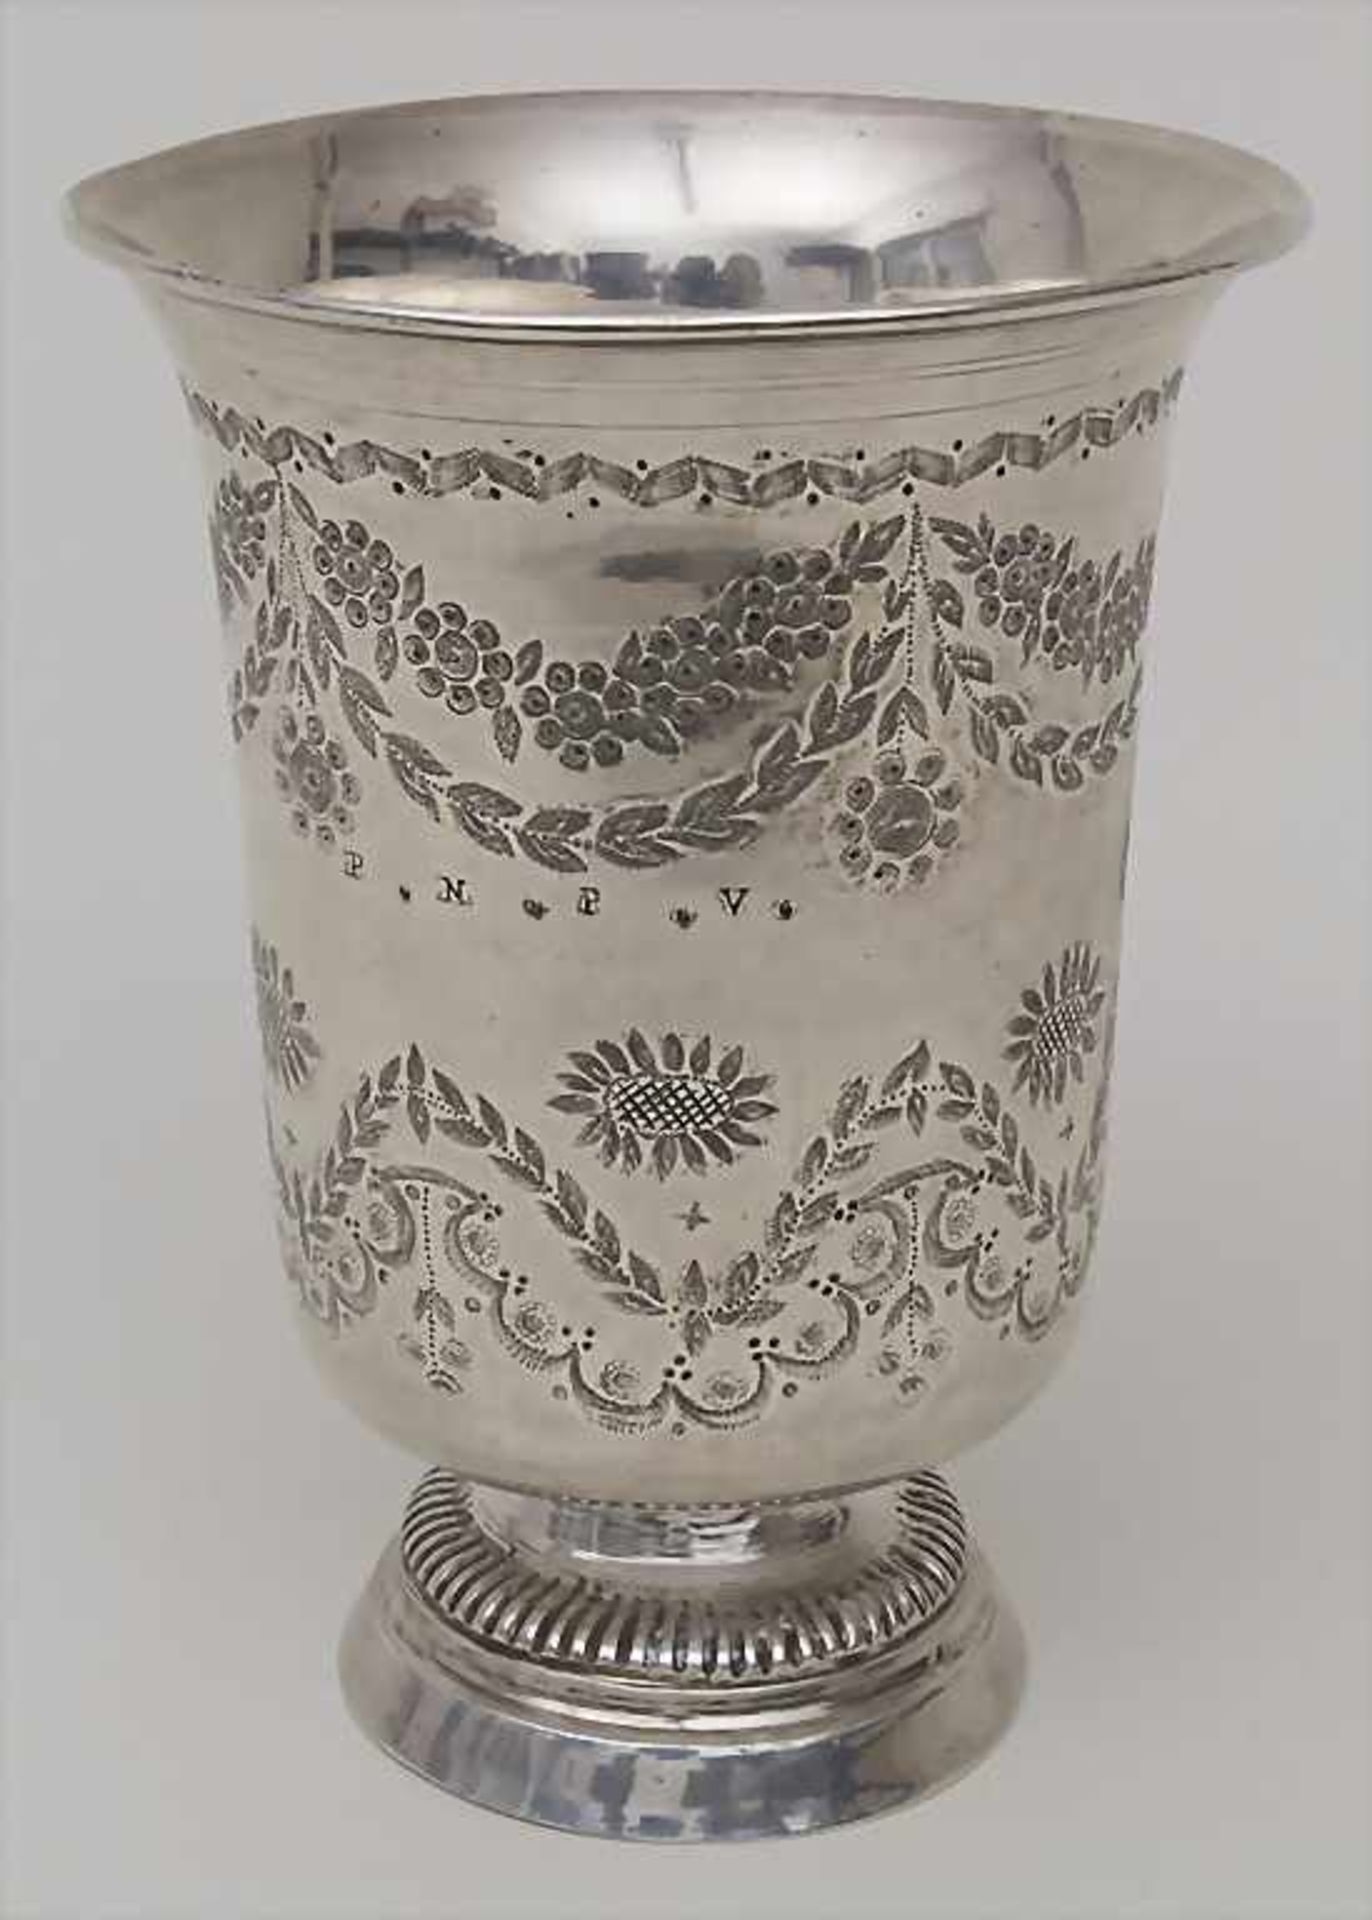 Glockenbecher / A bell shaped silver beaker, Troyes, 1819-1839Material: 950er Silber, umlaufend